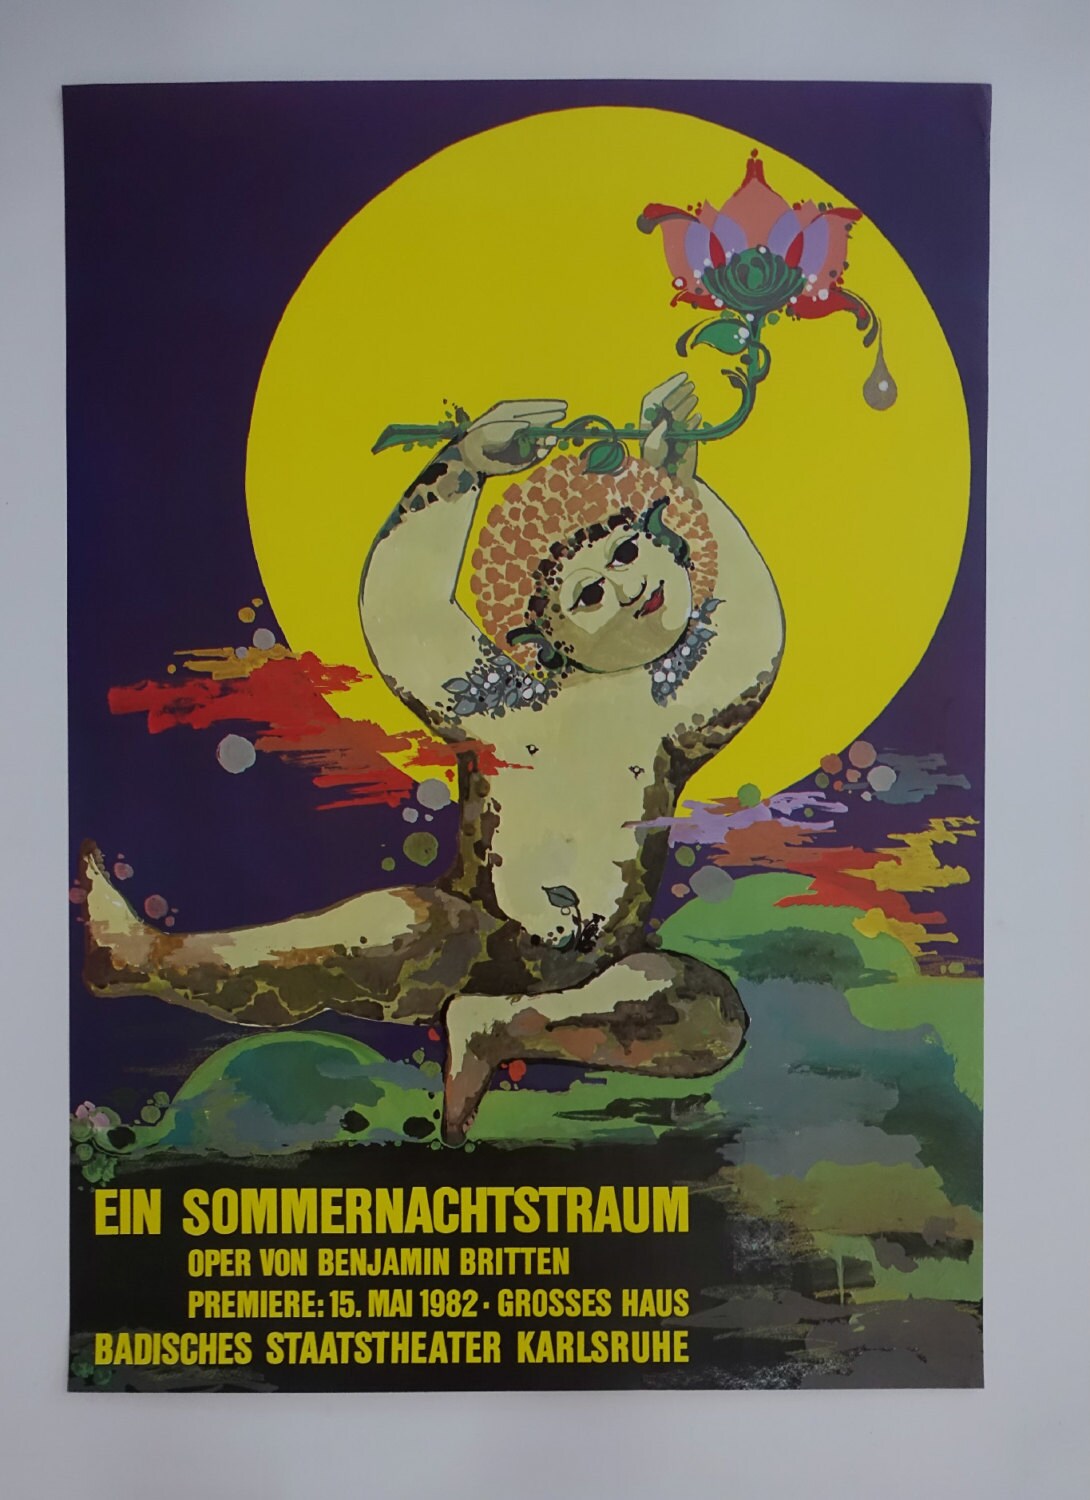 1982 Wiinblad A Midsummer Night’s Dream - Original Vintage Poster